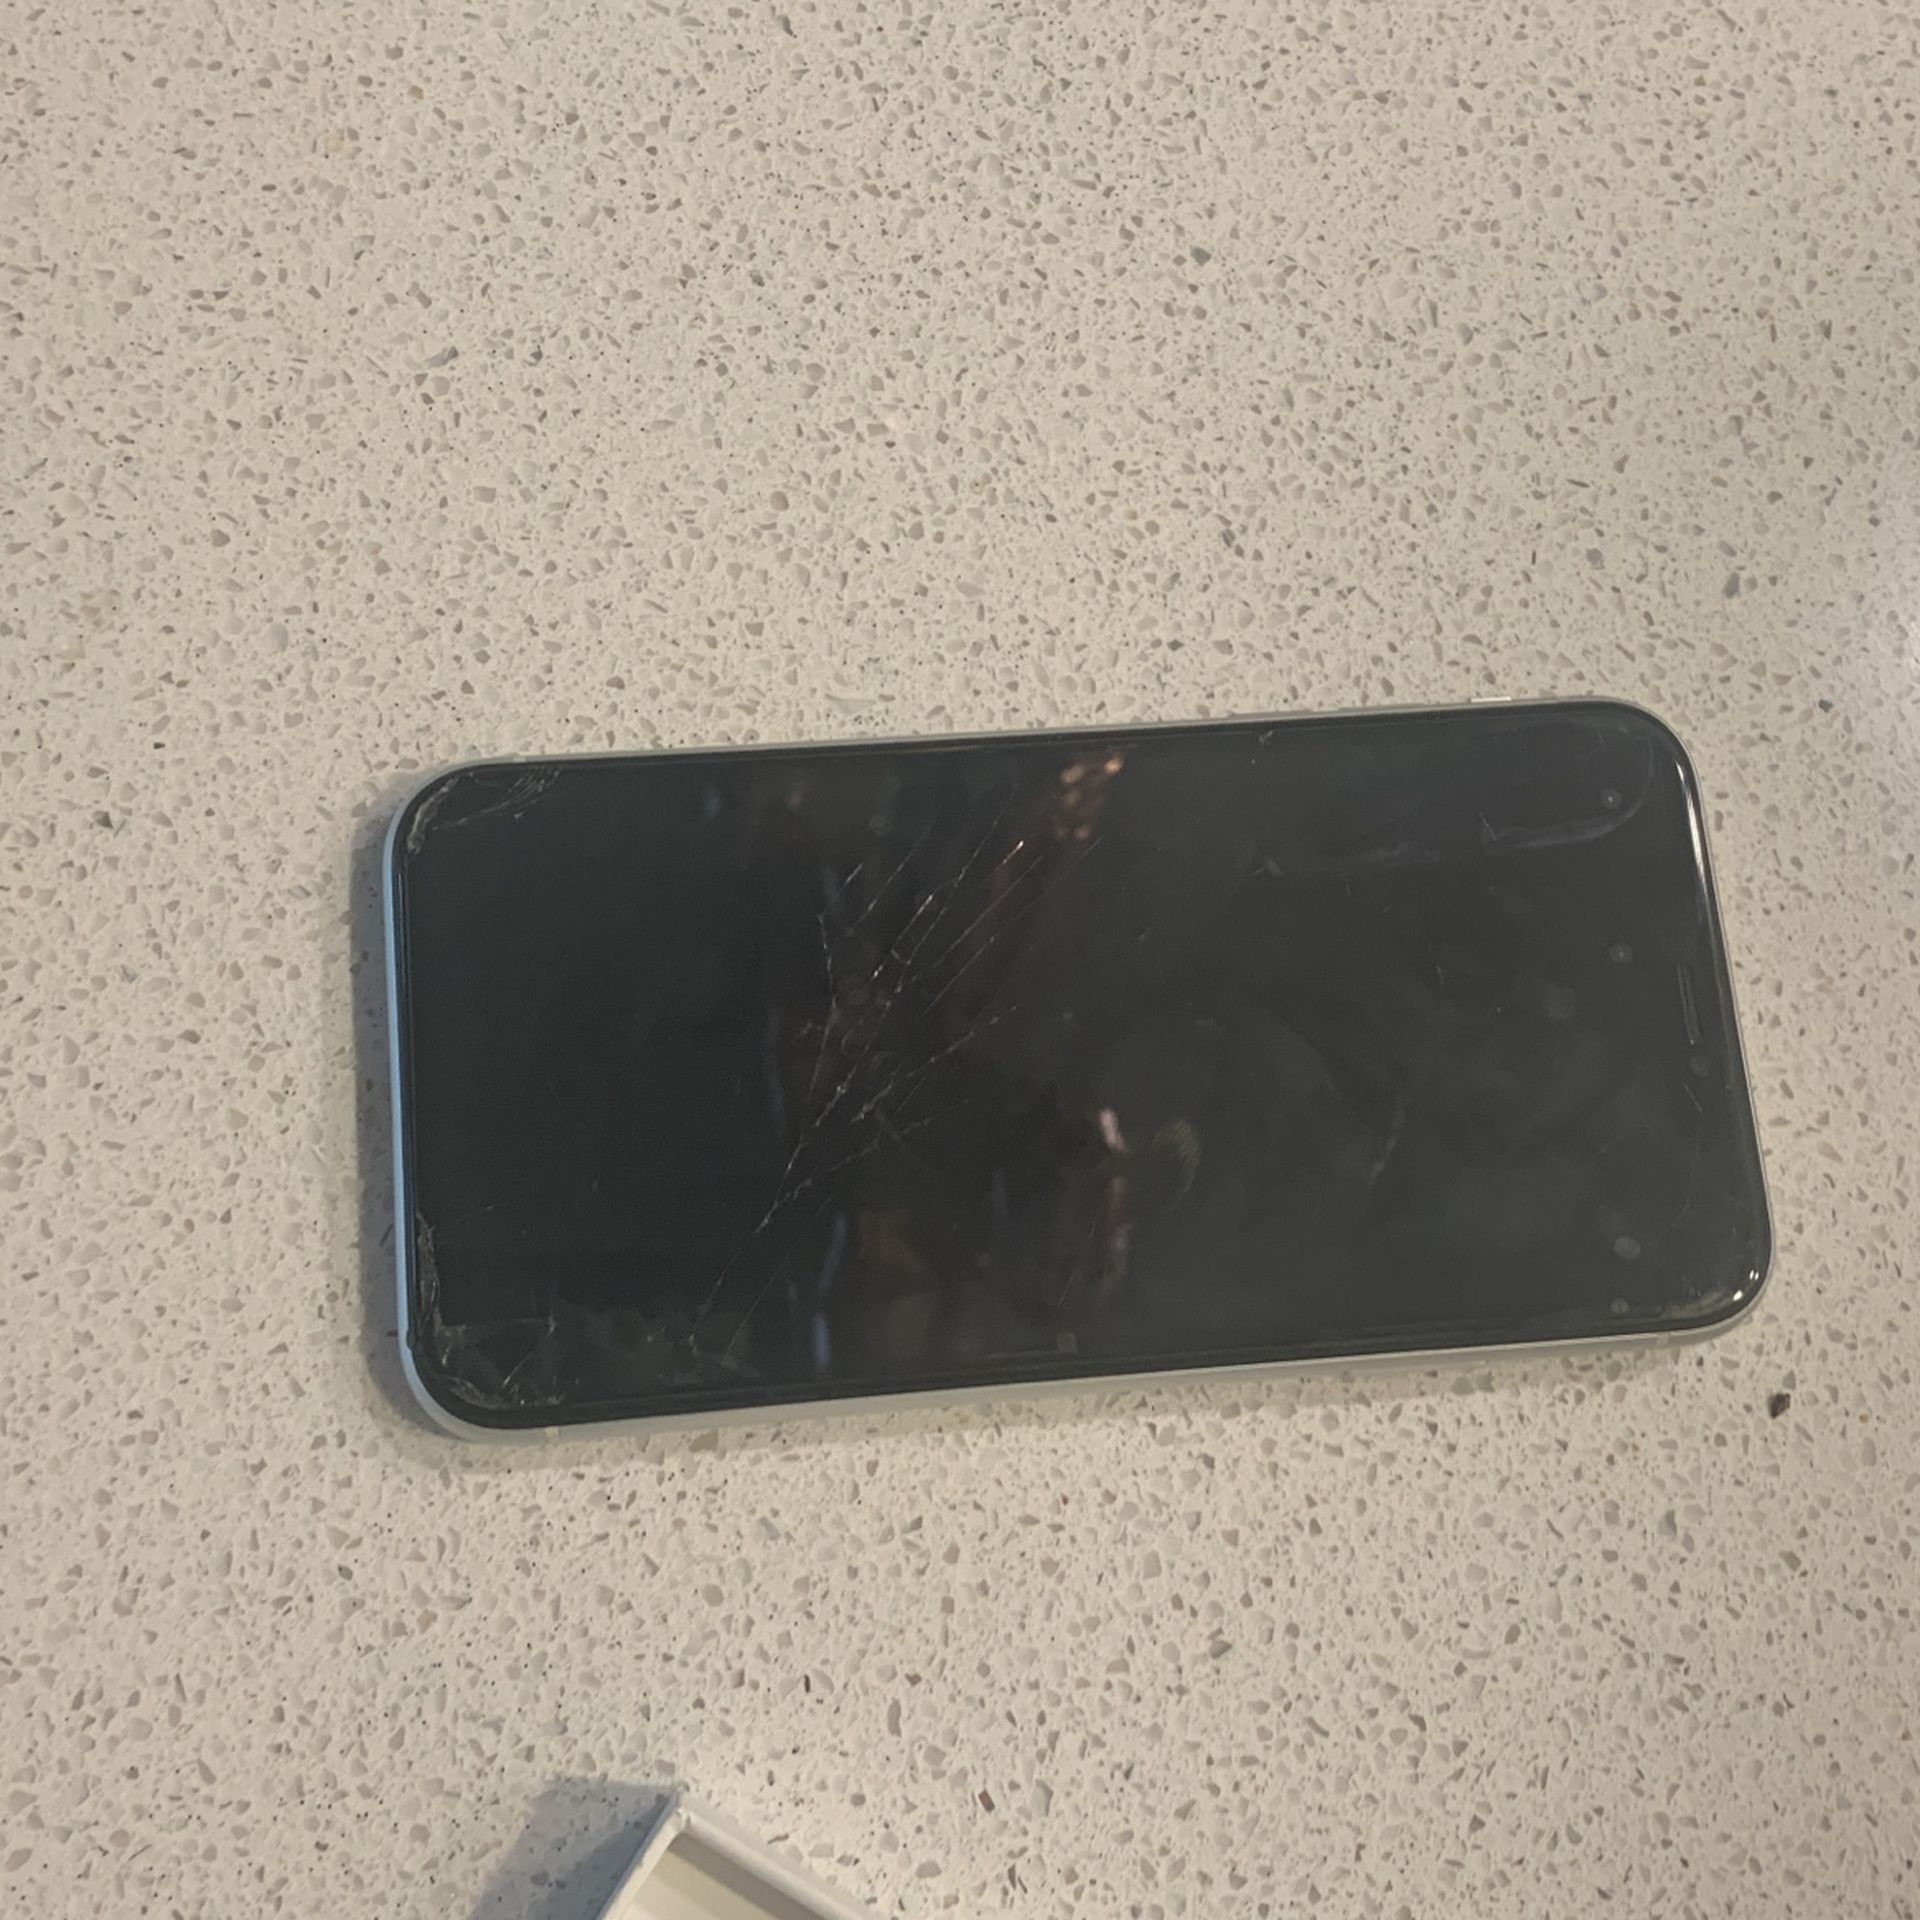 iPhone XR Broken Phone Black Screen 